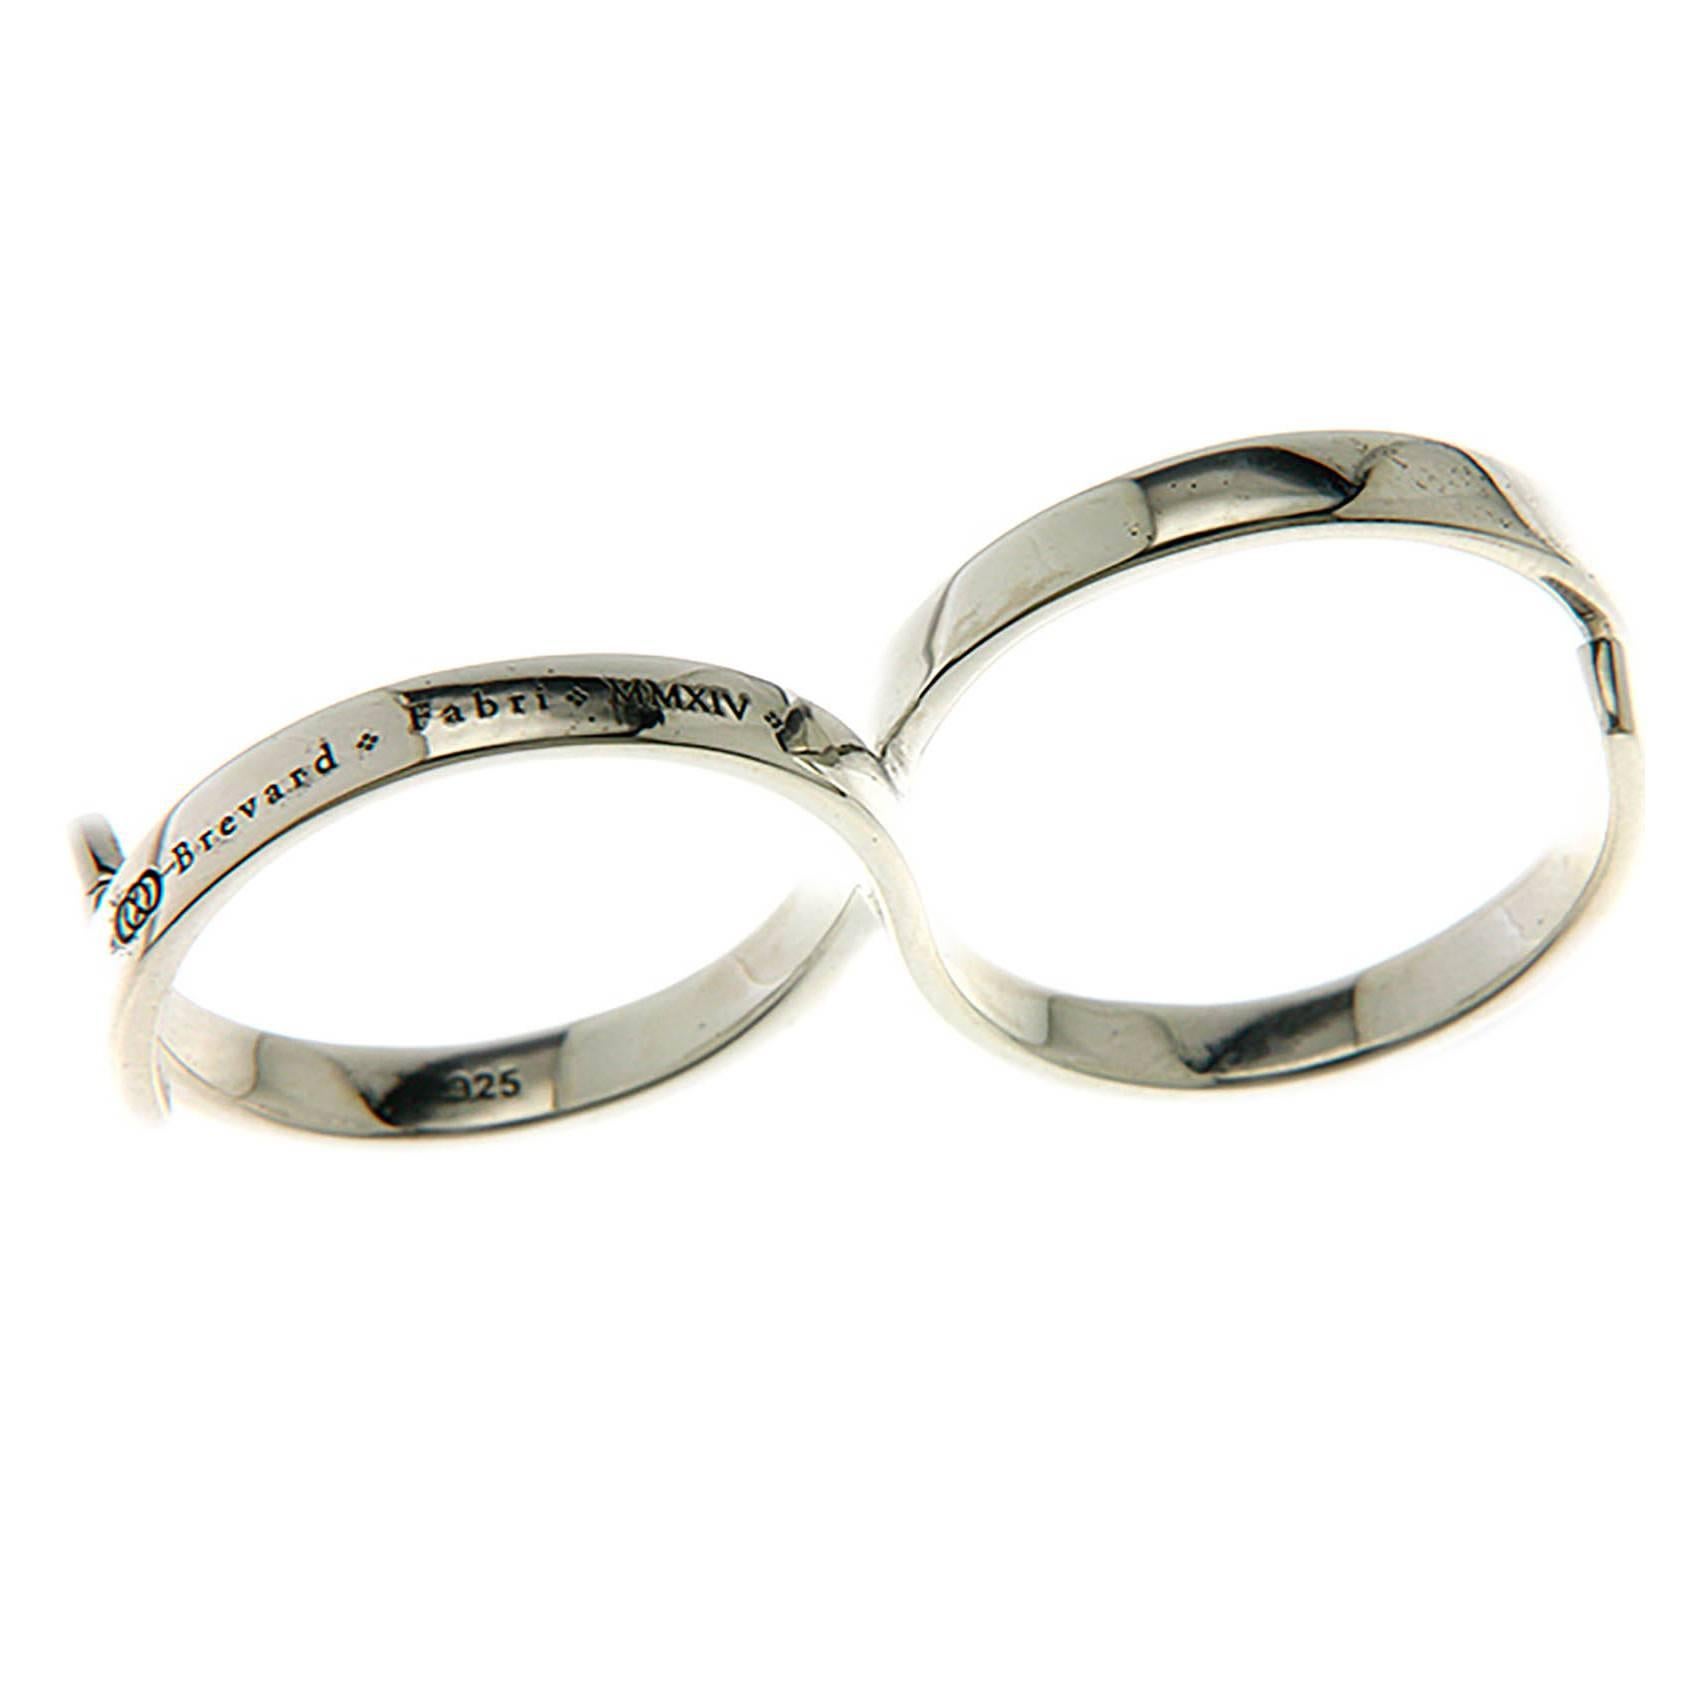 Fabri Infinity Single-Loop Adjustable Sterling Silver Ring For Sale